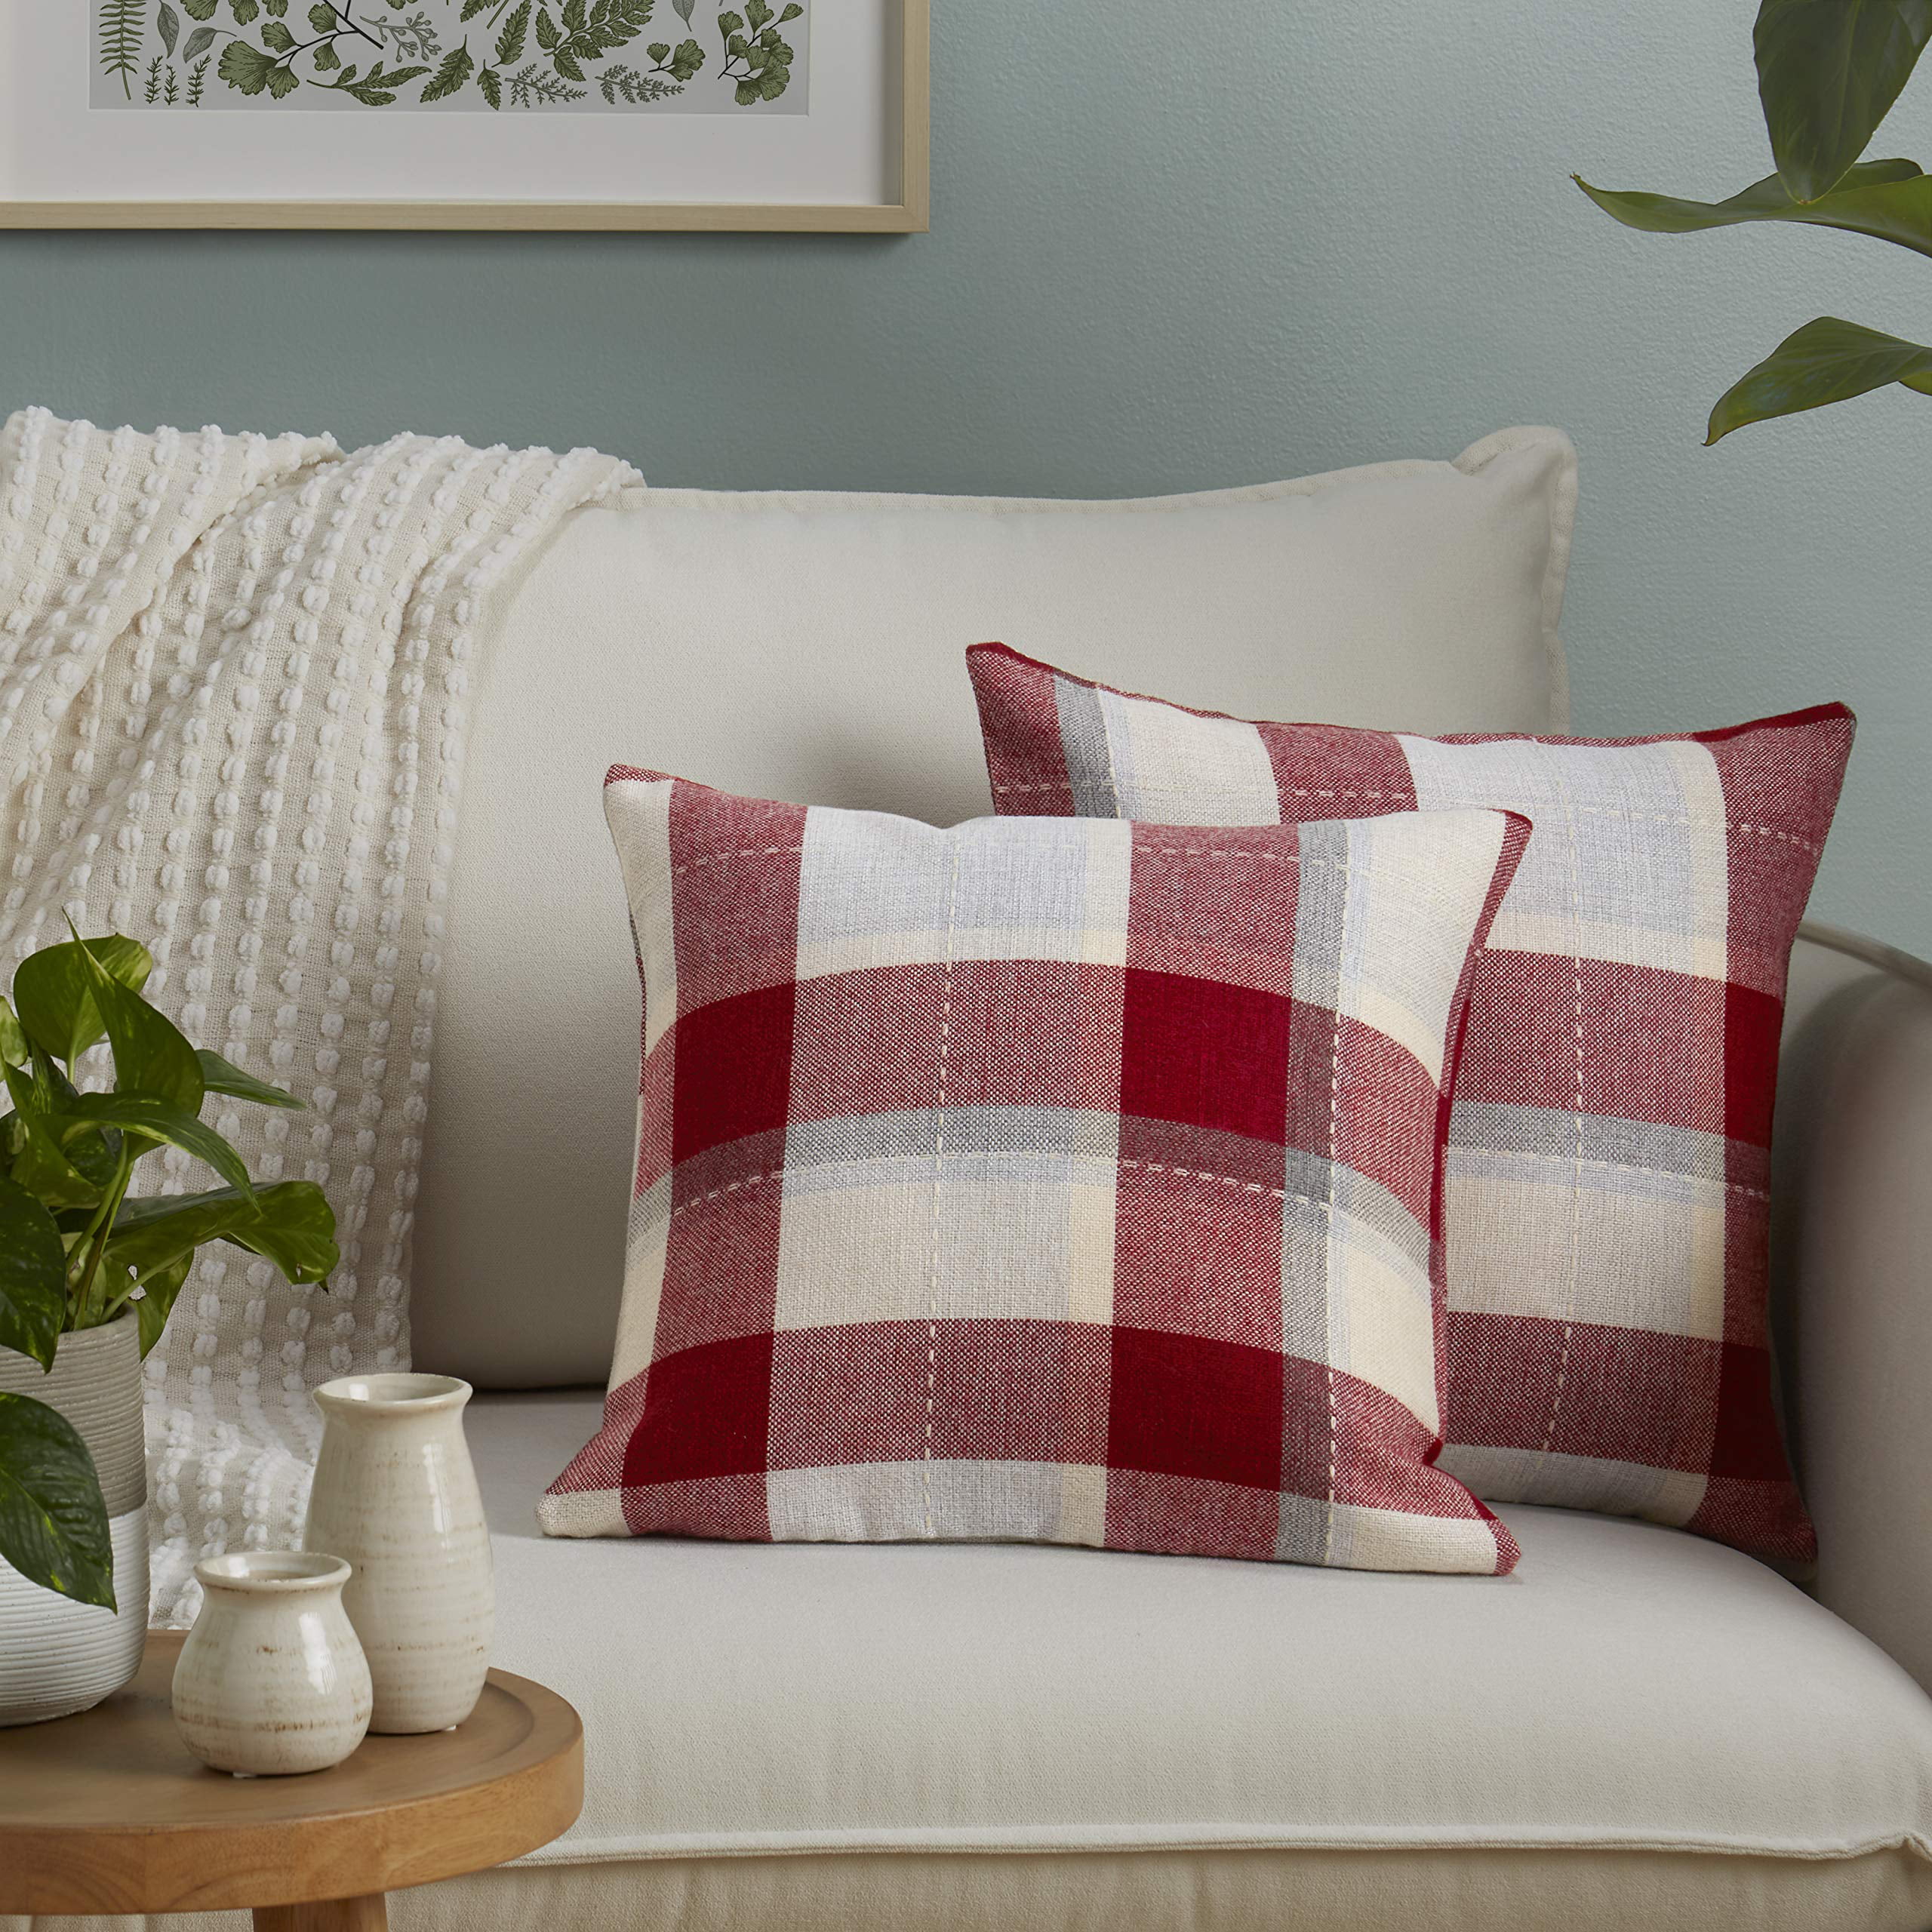 SoHome Jaquard Plaid Throw Pillow Covers 18x18, Decorative